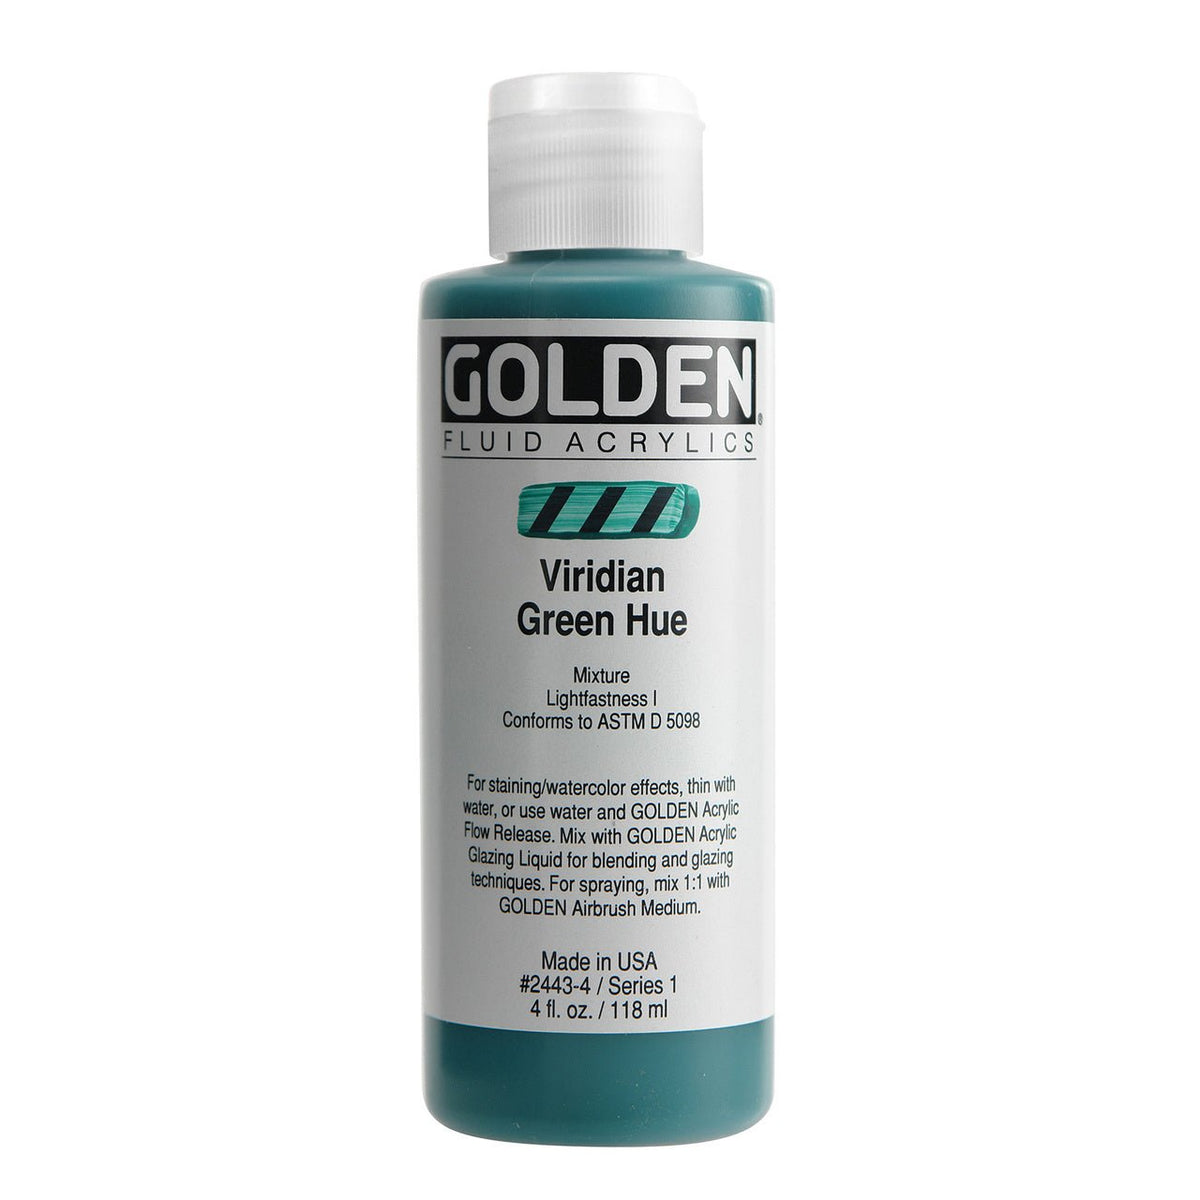 Golden Fluid Acrylic Viridian Green Hue 4 oz - merriartist.com